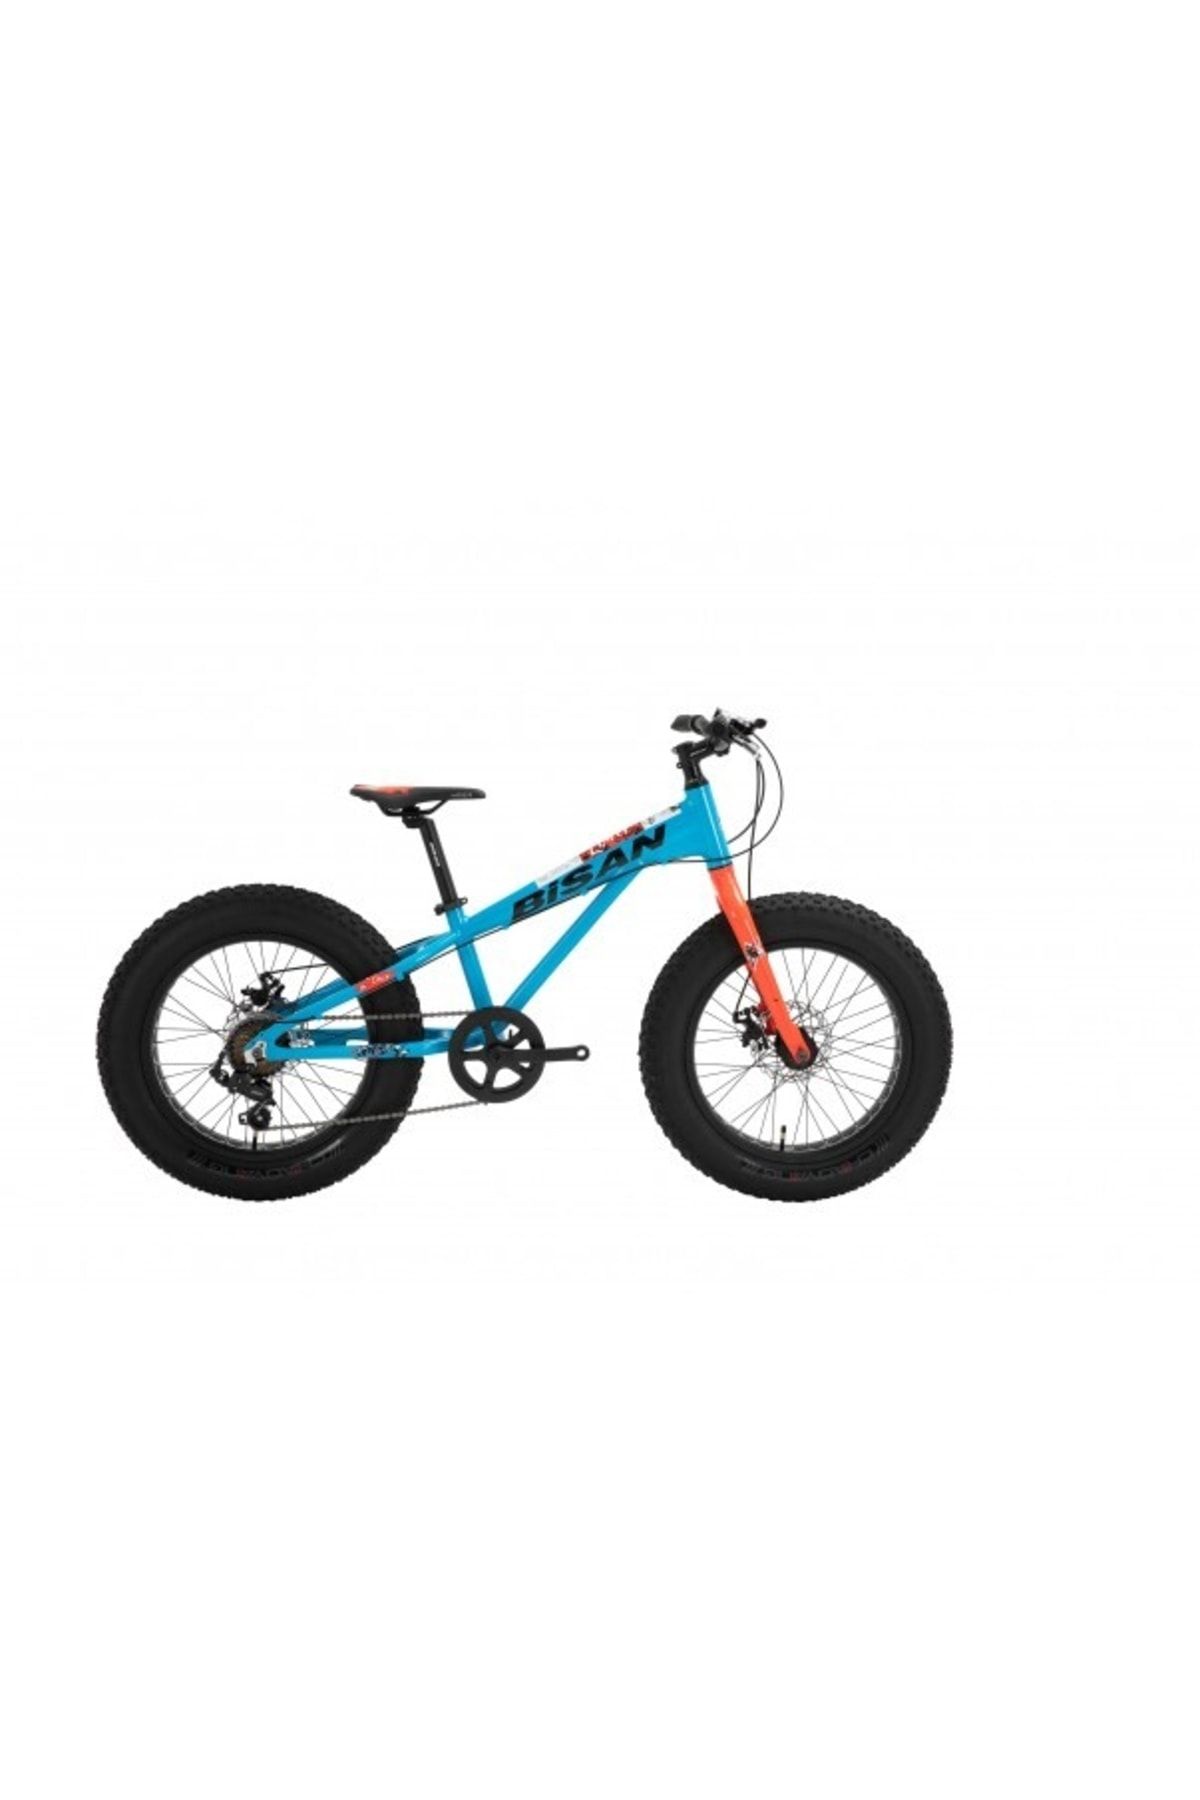 Bisan Limit 20 Çocuk Bisikleti Fat Bike (mavi-kırmızı) 30